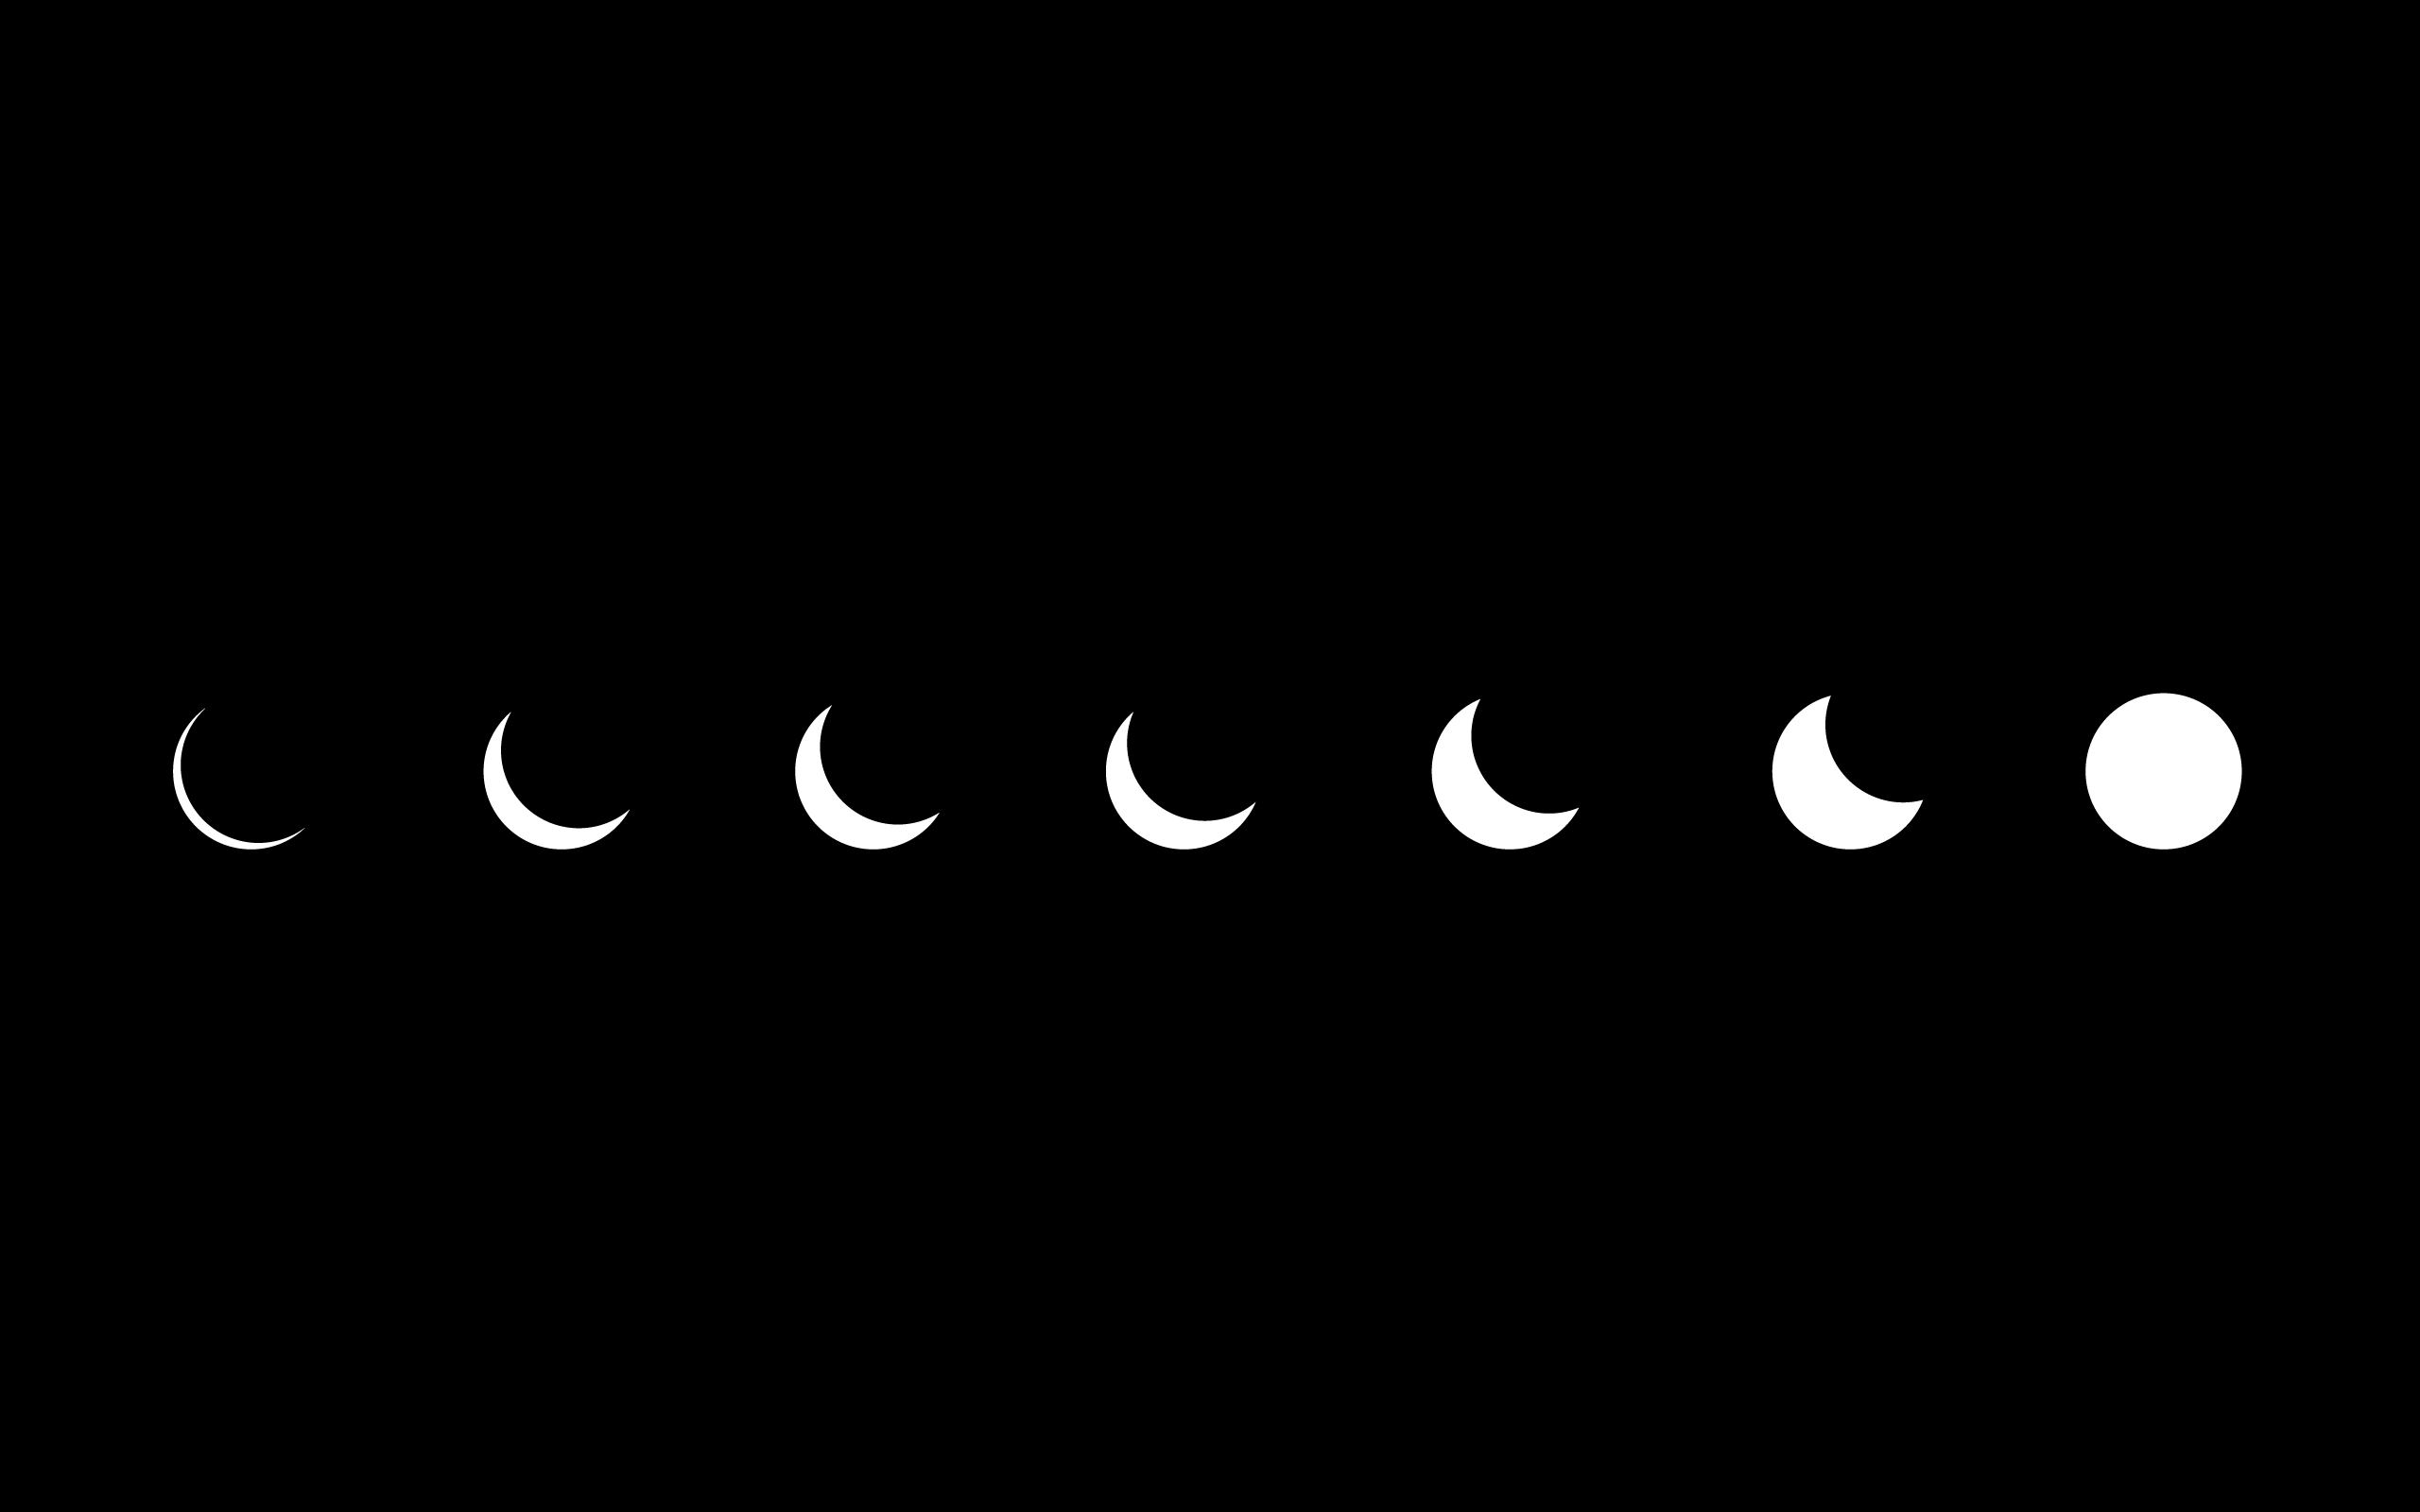 General 2560x1600 minimalism artwork black background black white monochrome Moon eclipse 